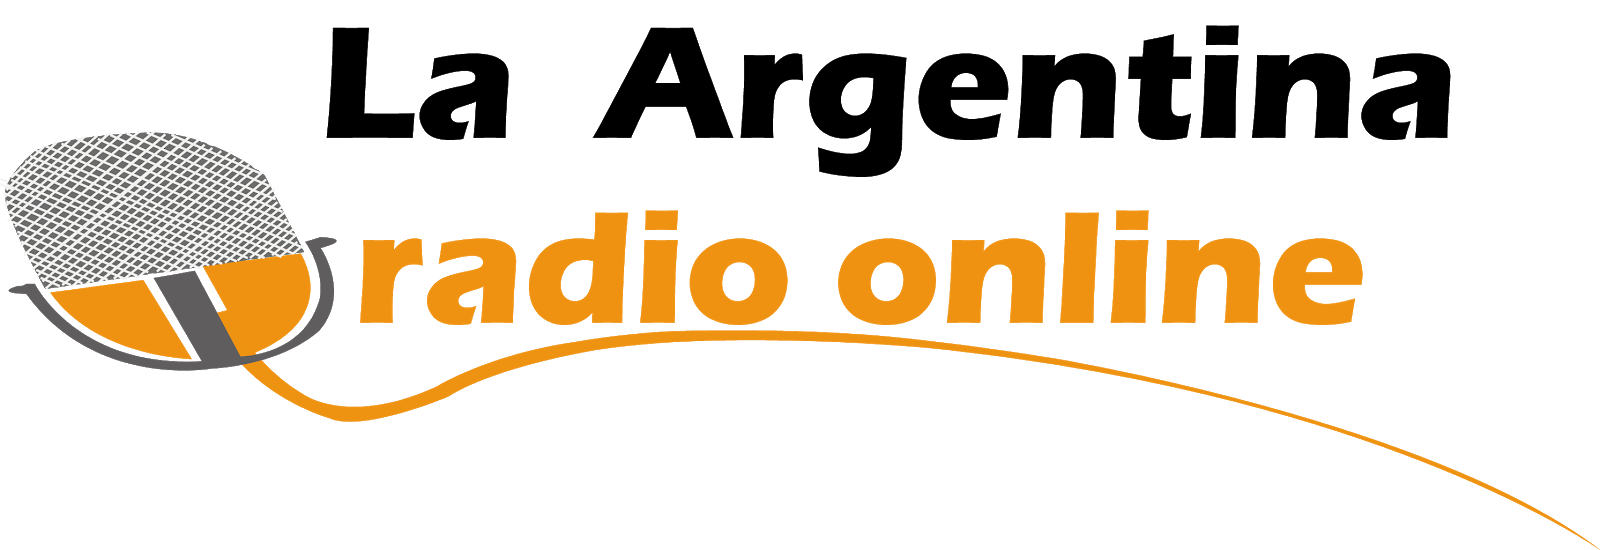 La Argentina Radio Online